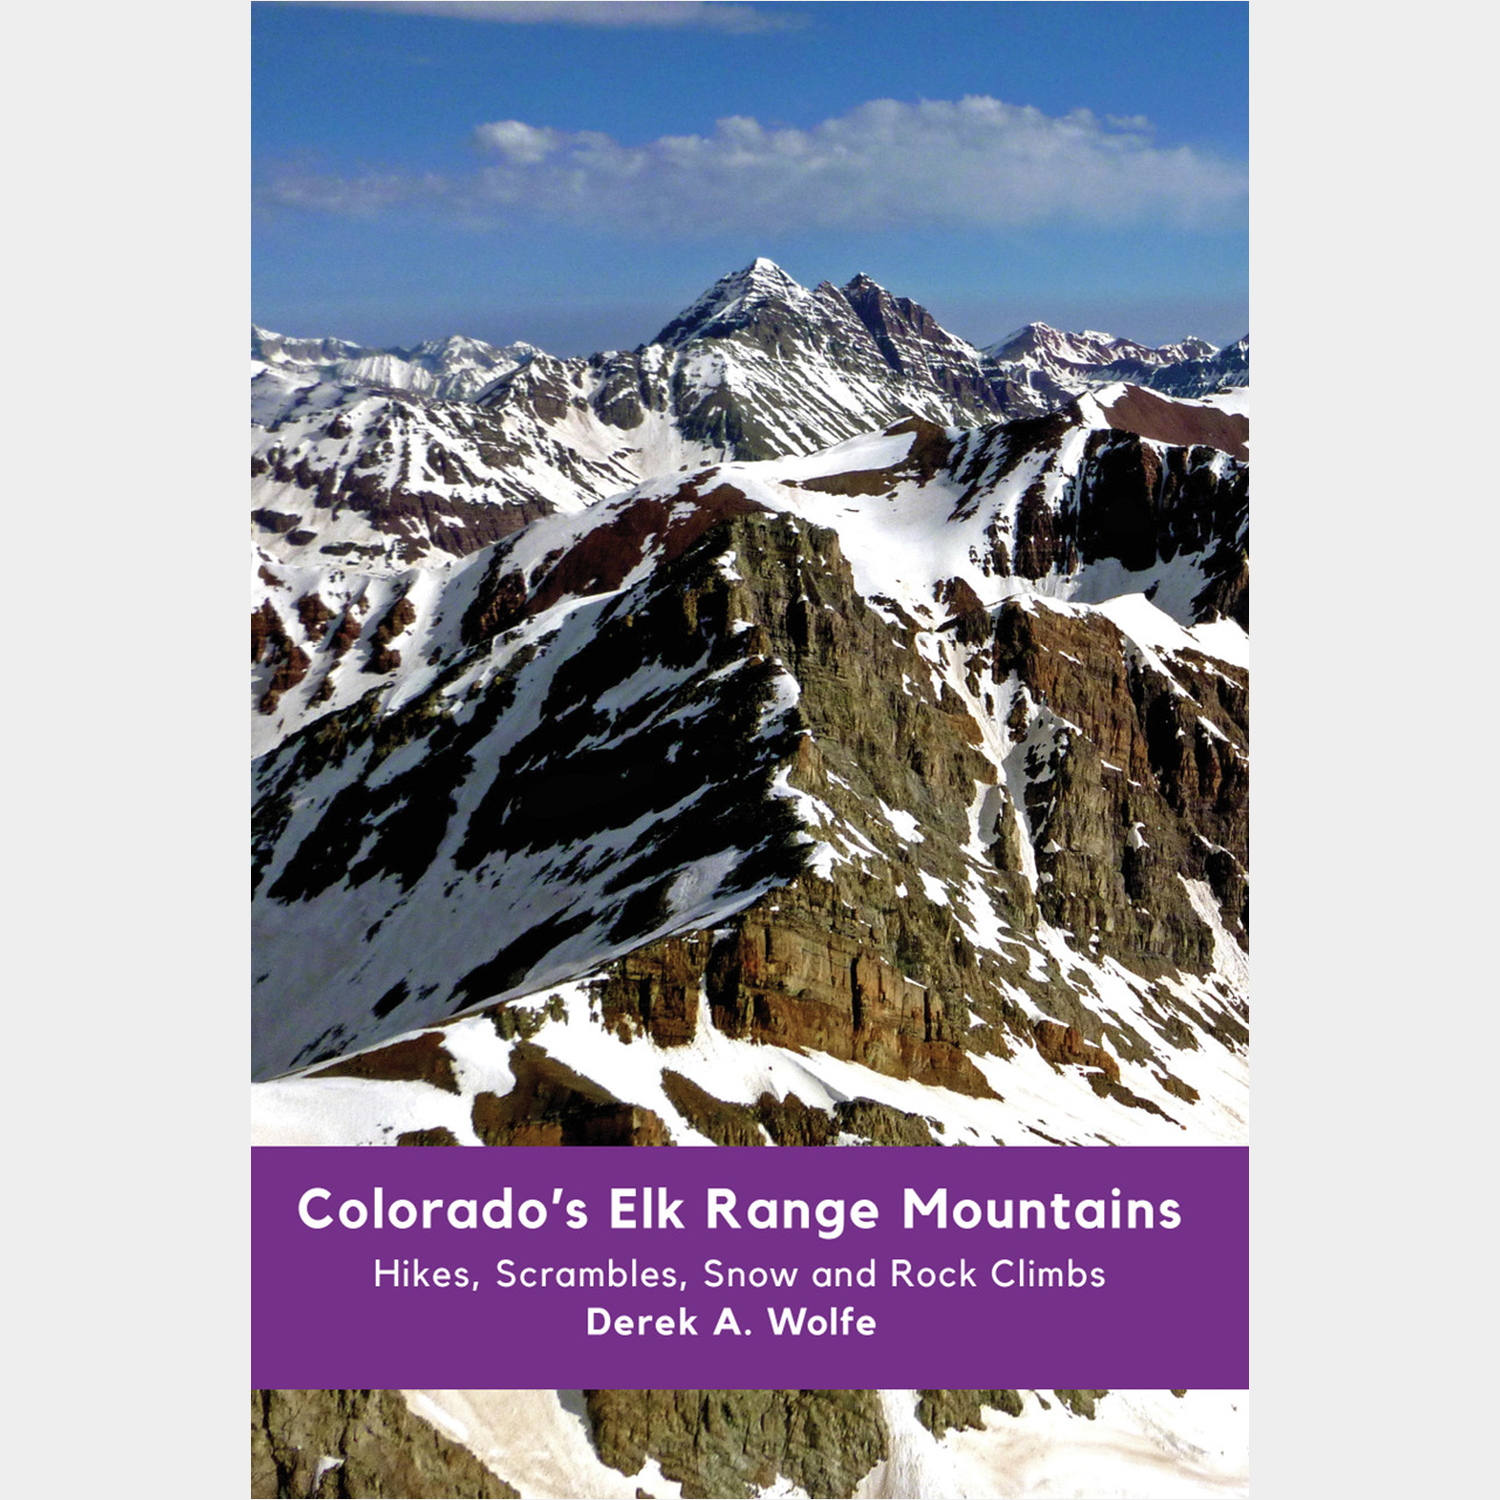 Colorado's Elk Range Mountains : Hikes, Scrambles, Snow and Rock Climbs